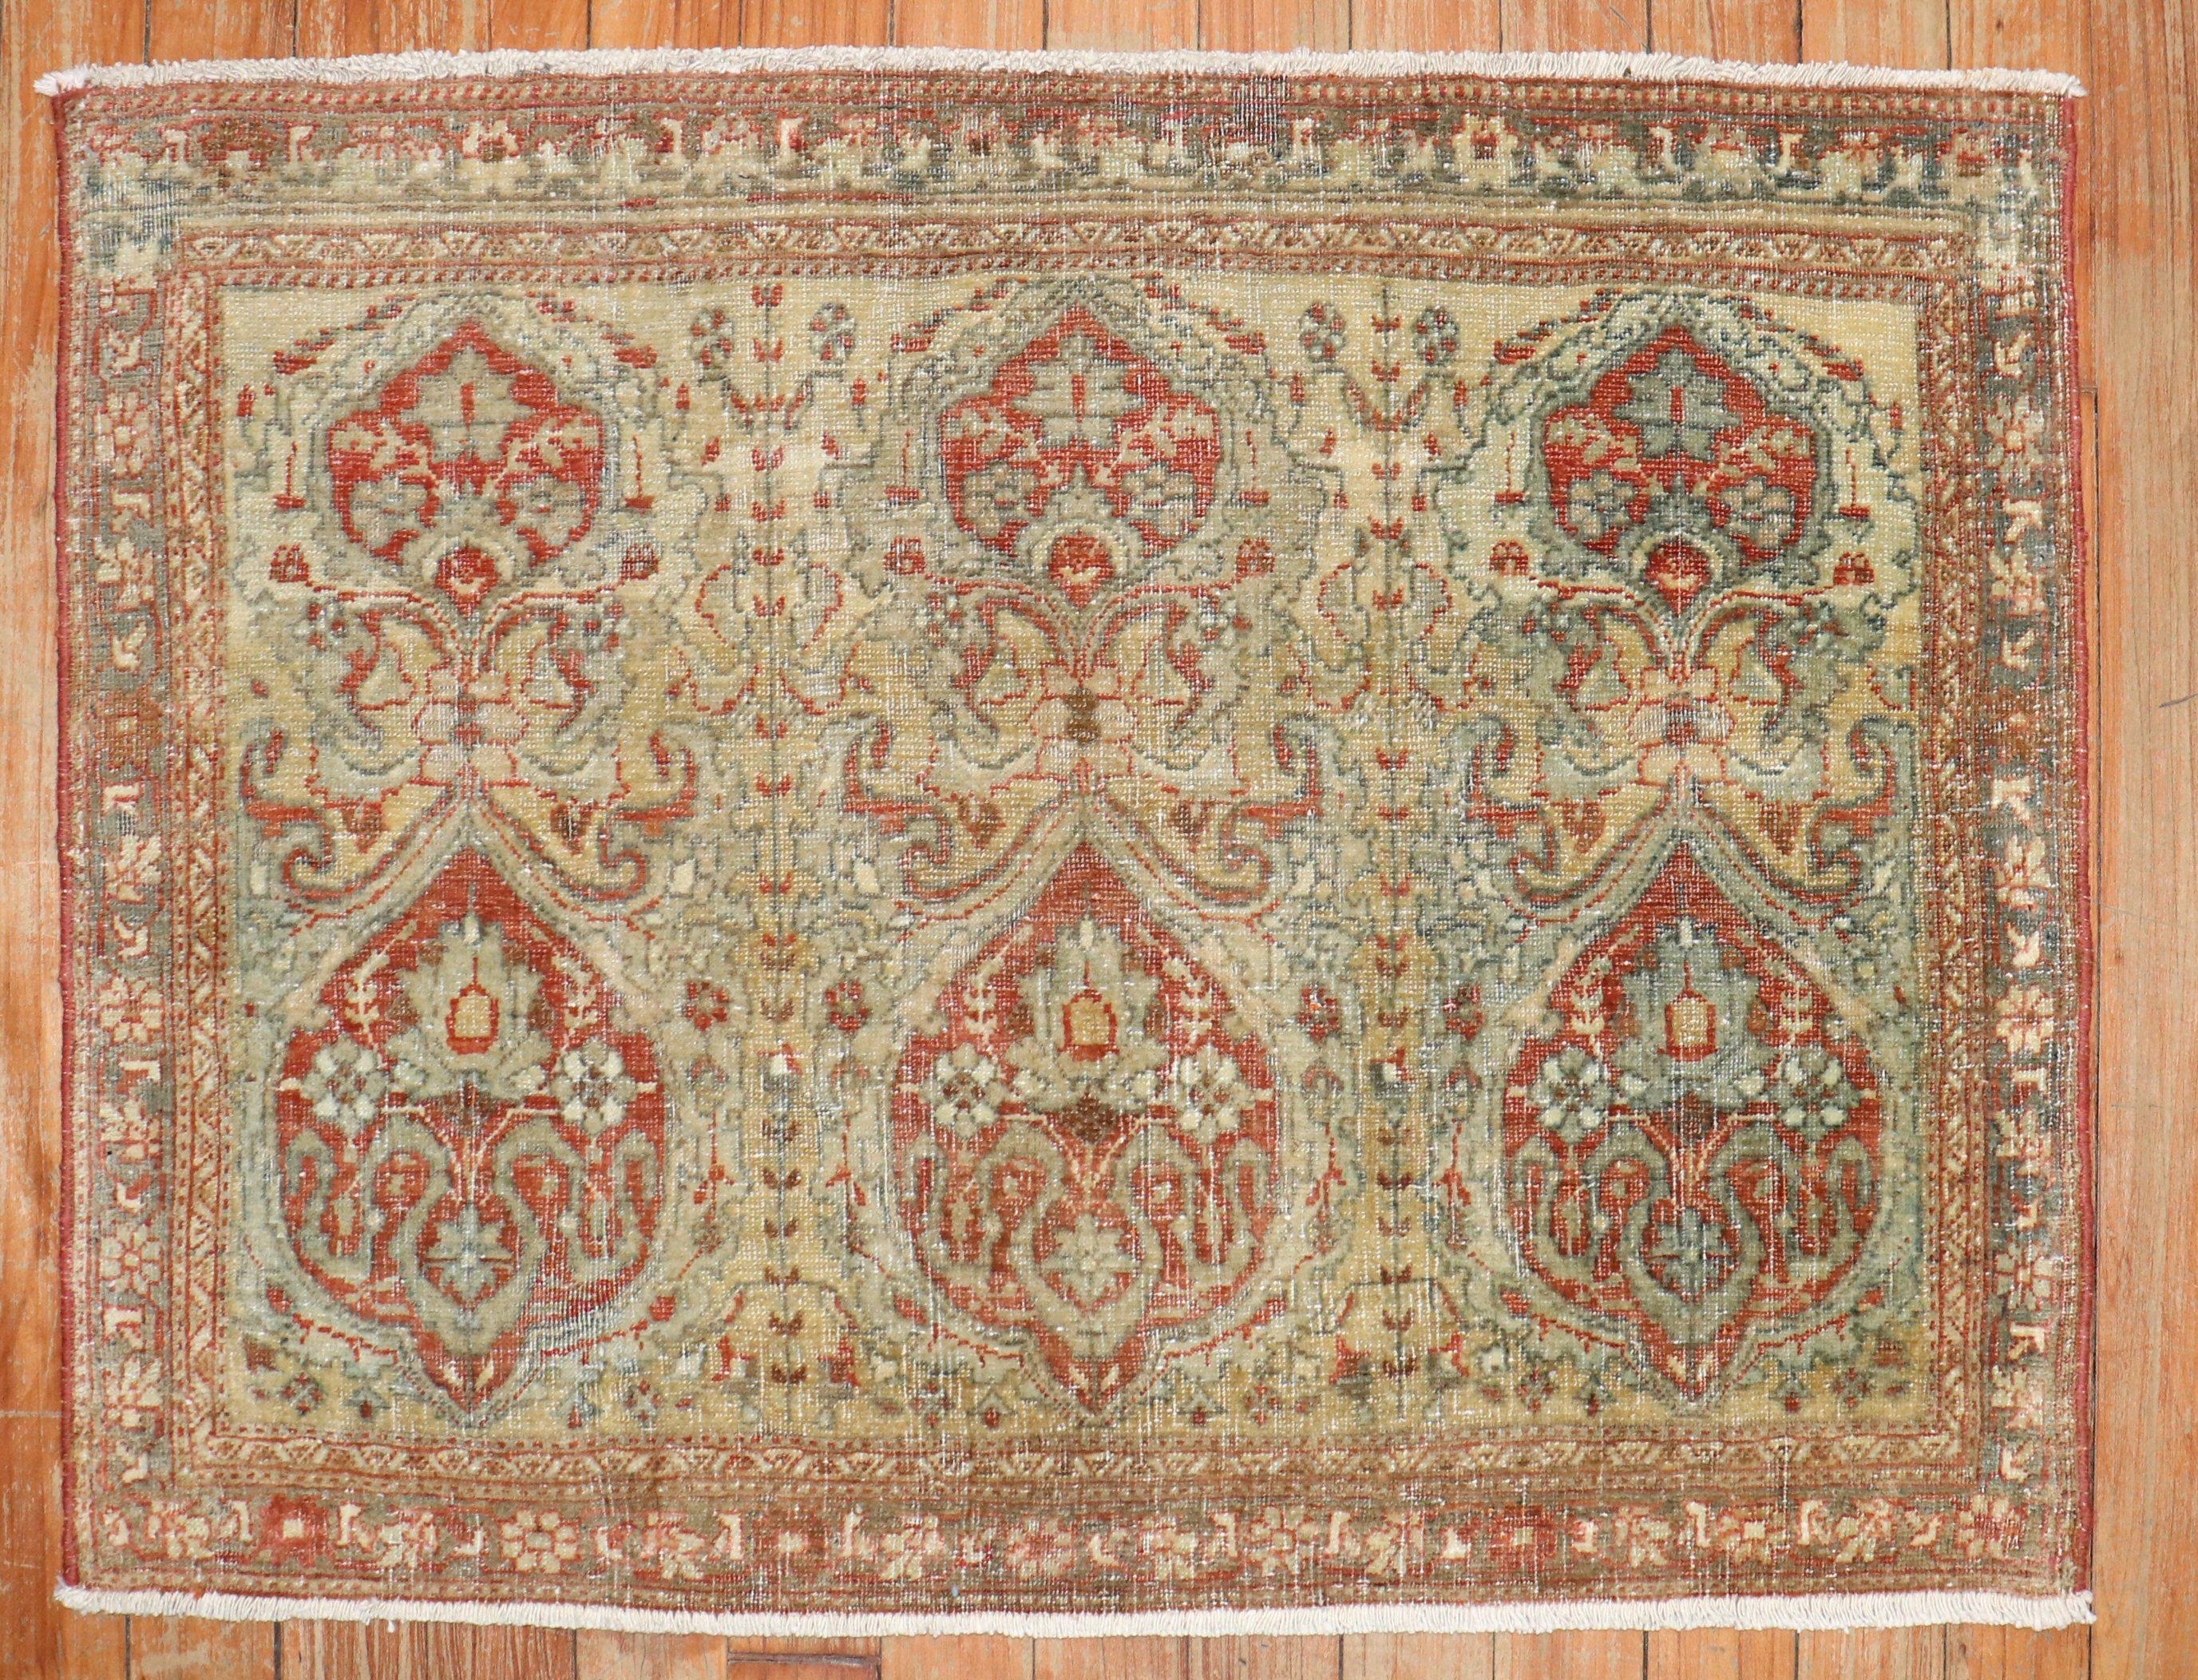 mini size late 19th Century Persian Sarouk Ferehan Rug

Measures: 1'10'' x 2'6''